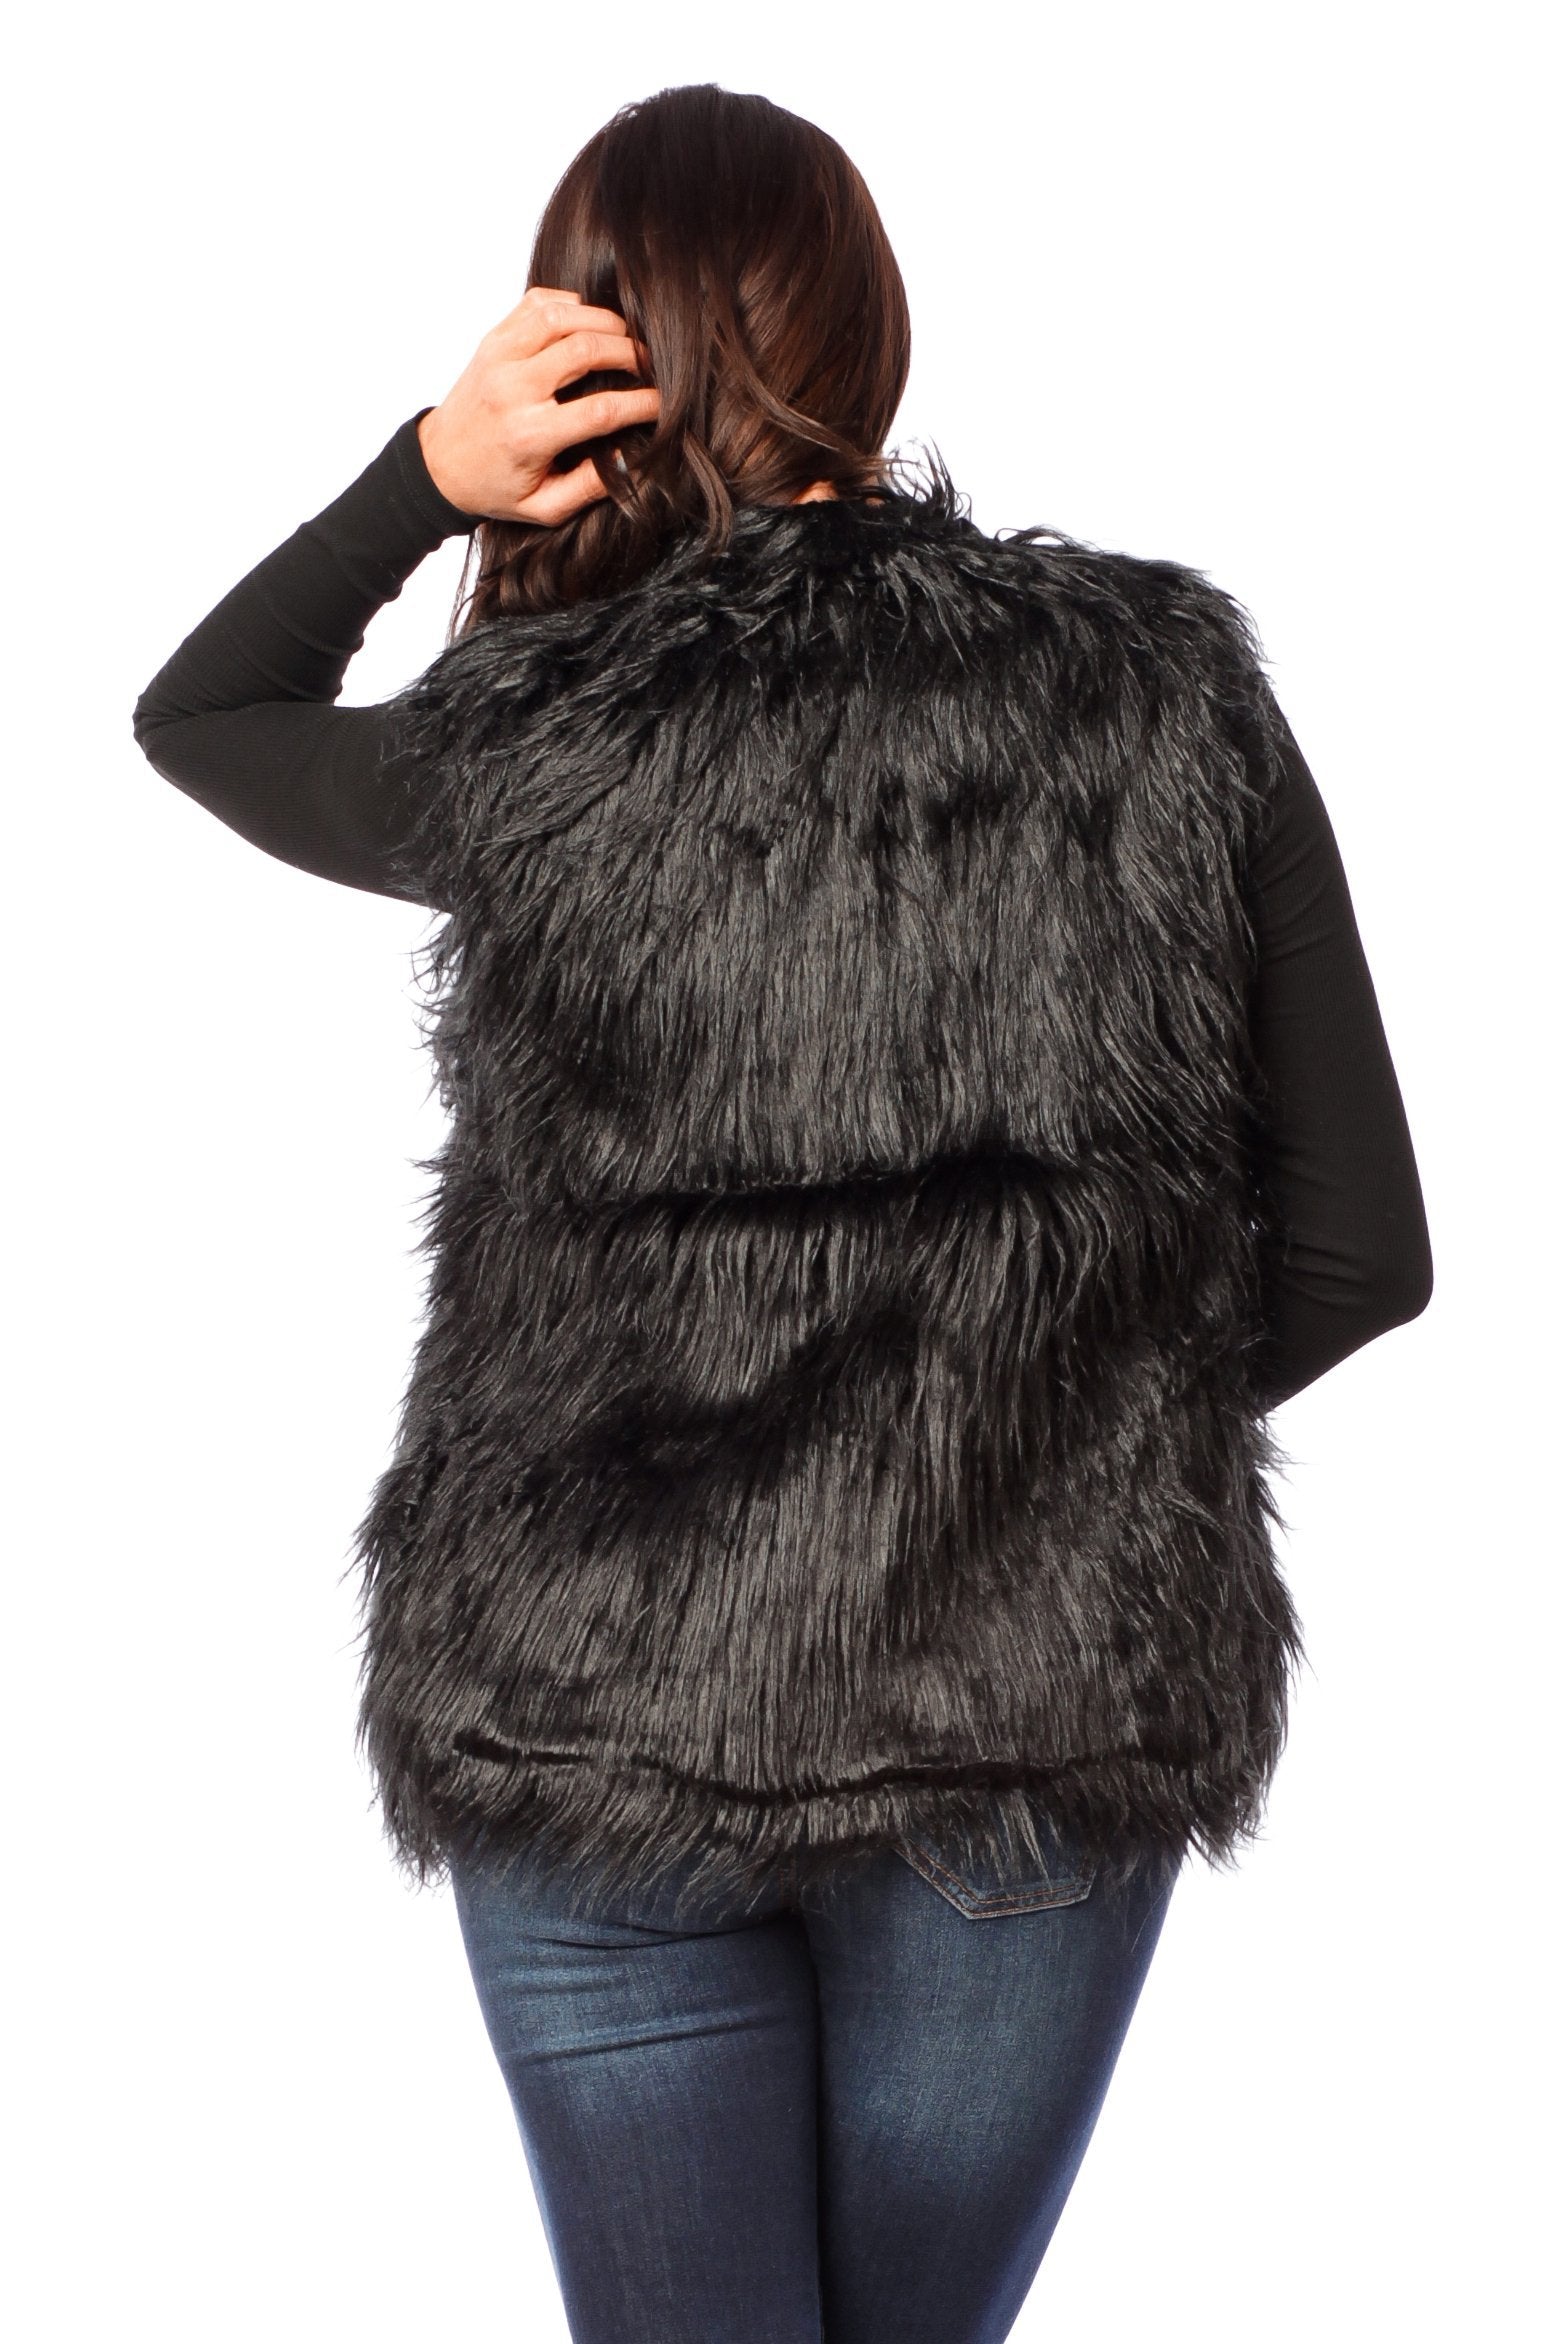 Hollywood Star Fashion Women's Artificial Sleeveless Faux Fur Coat Vest Jacket